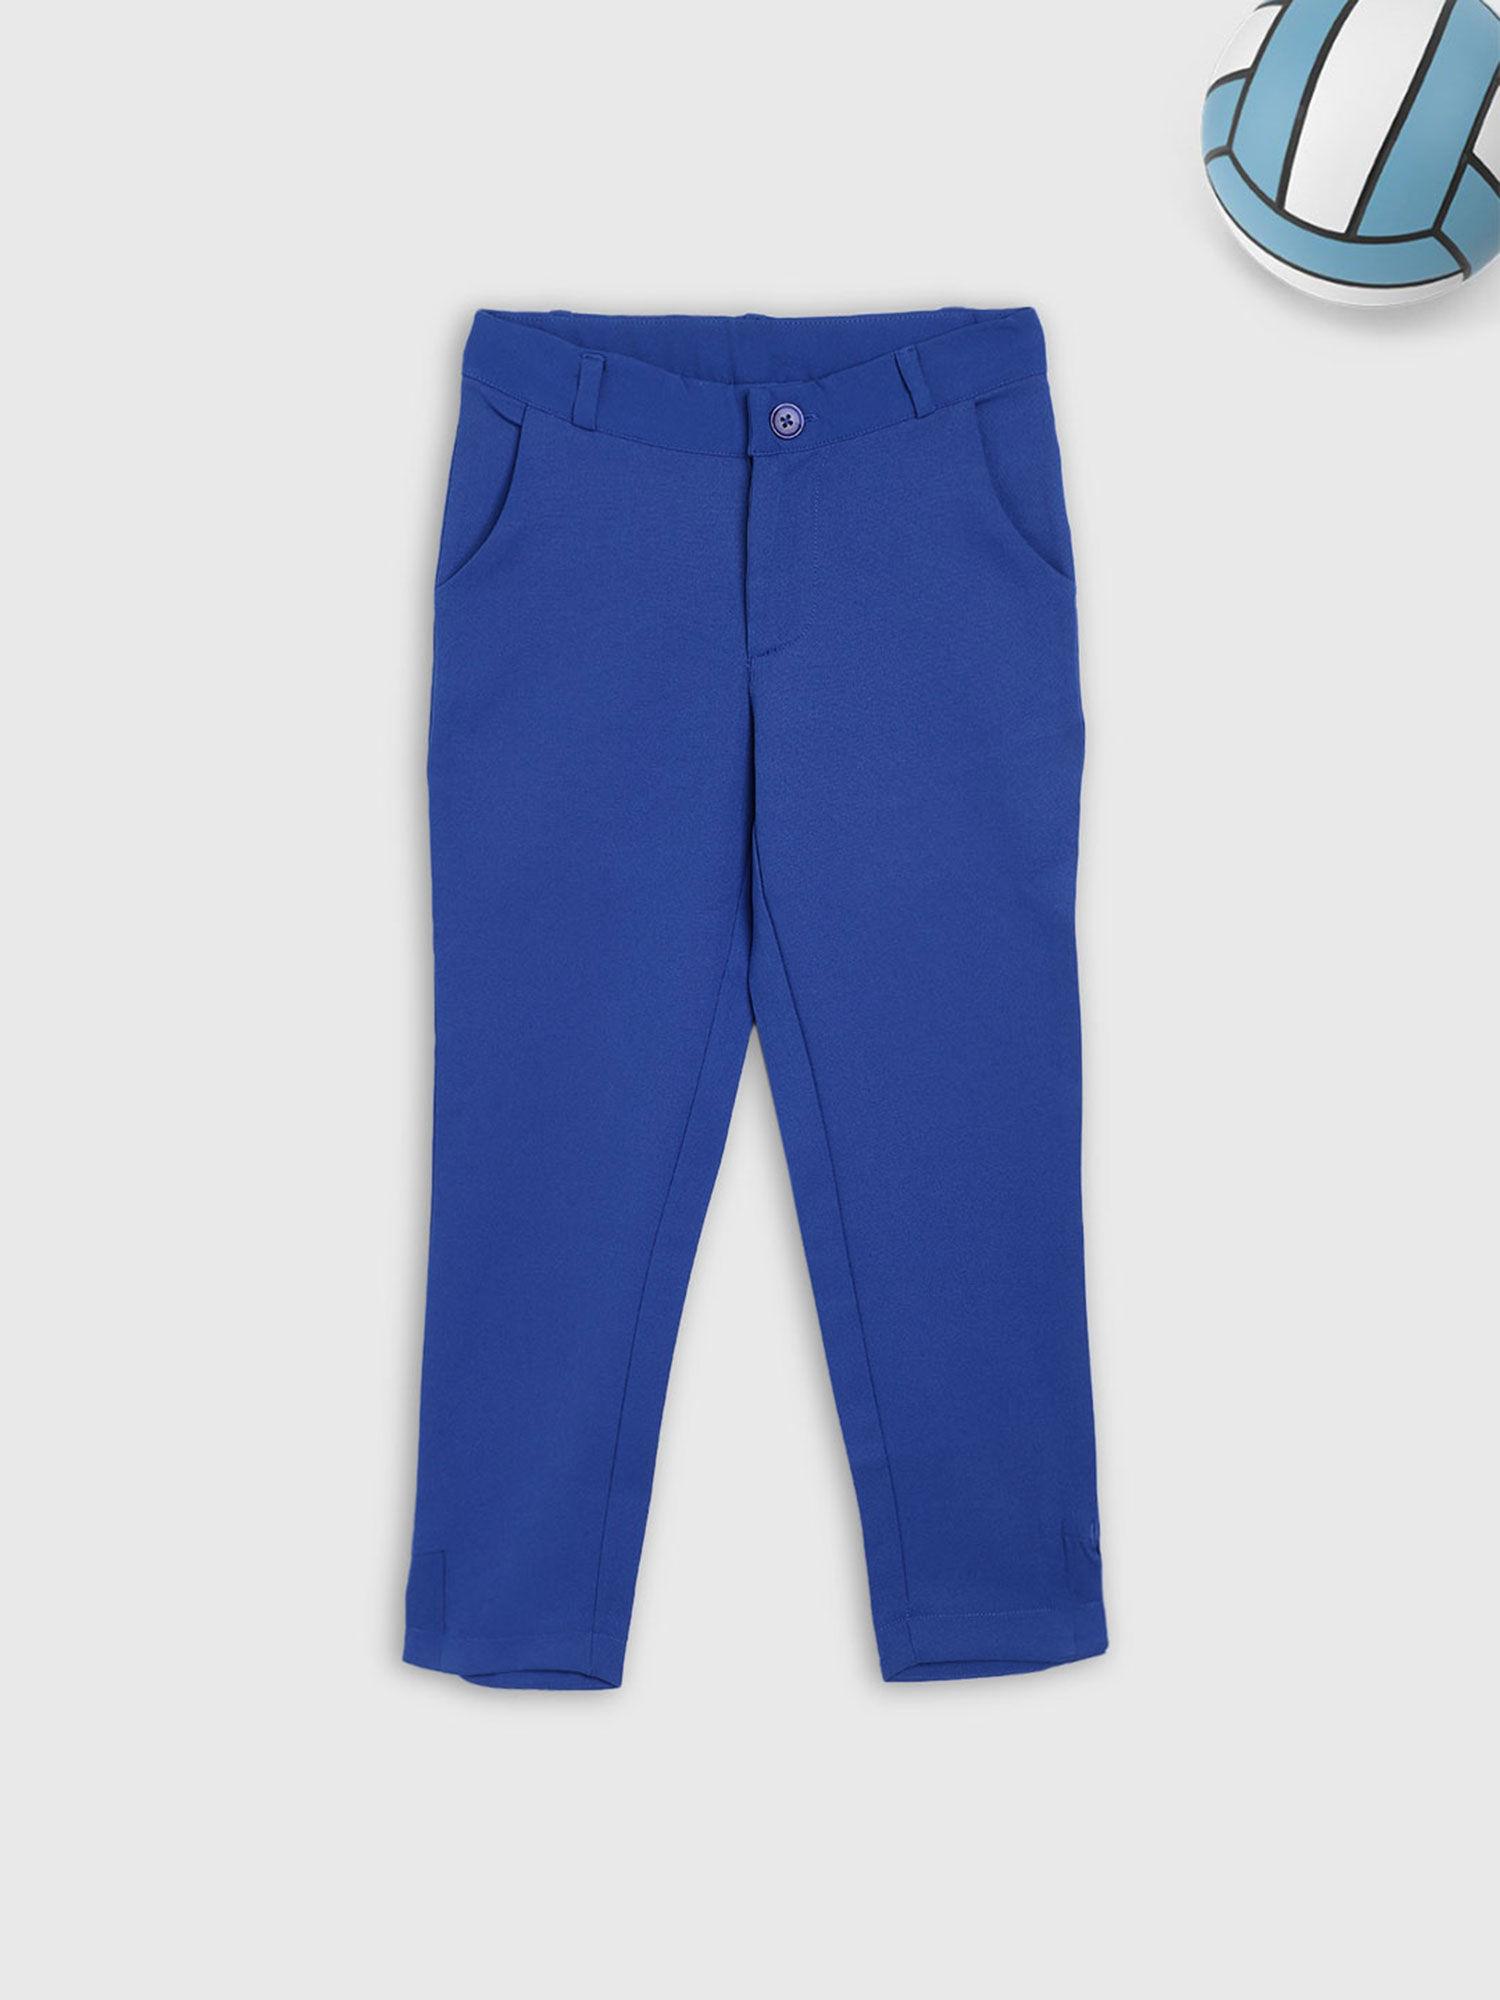 blue printed trouser